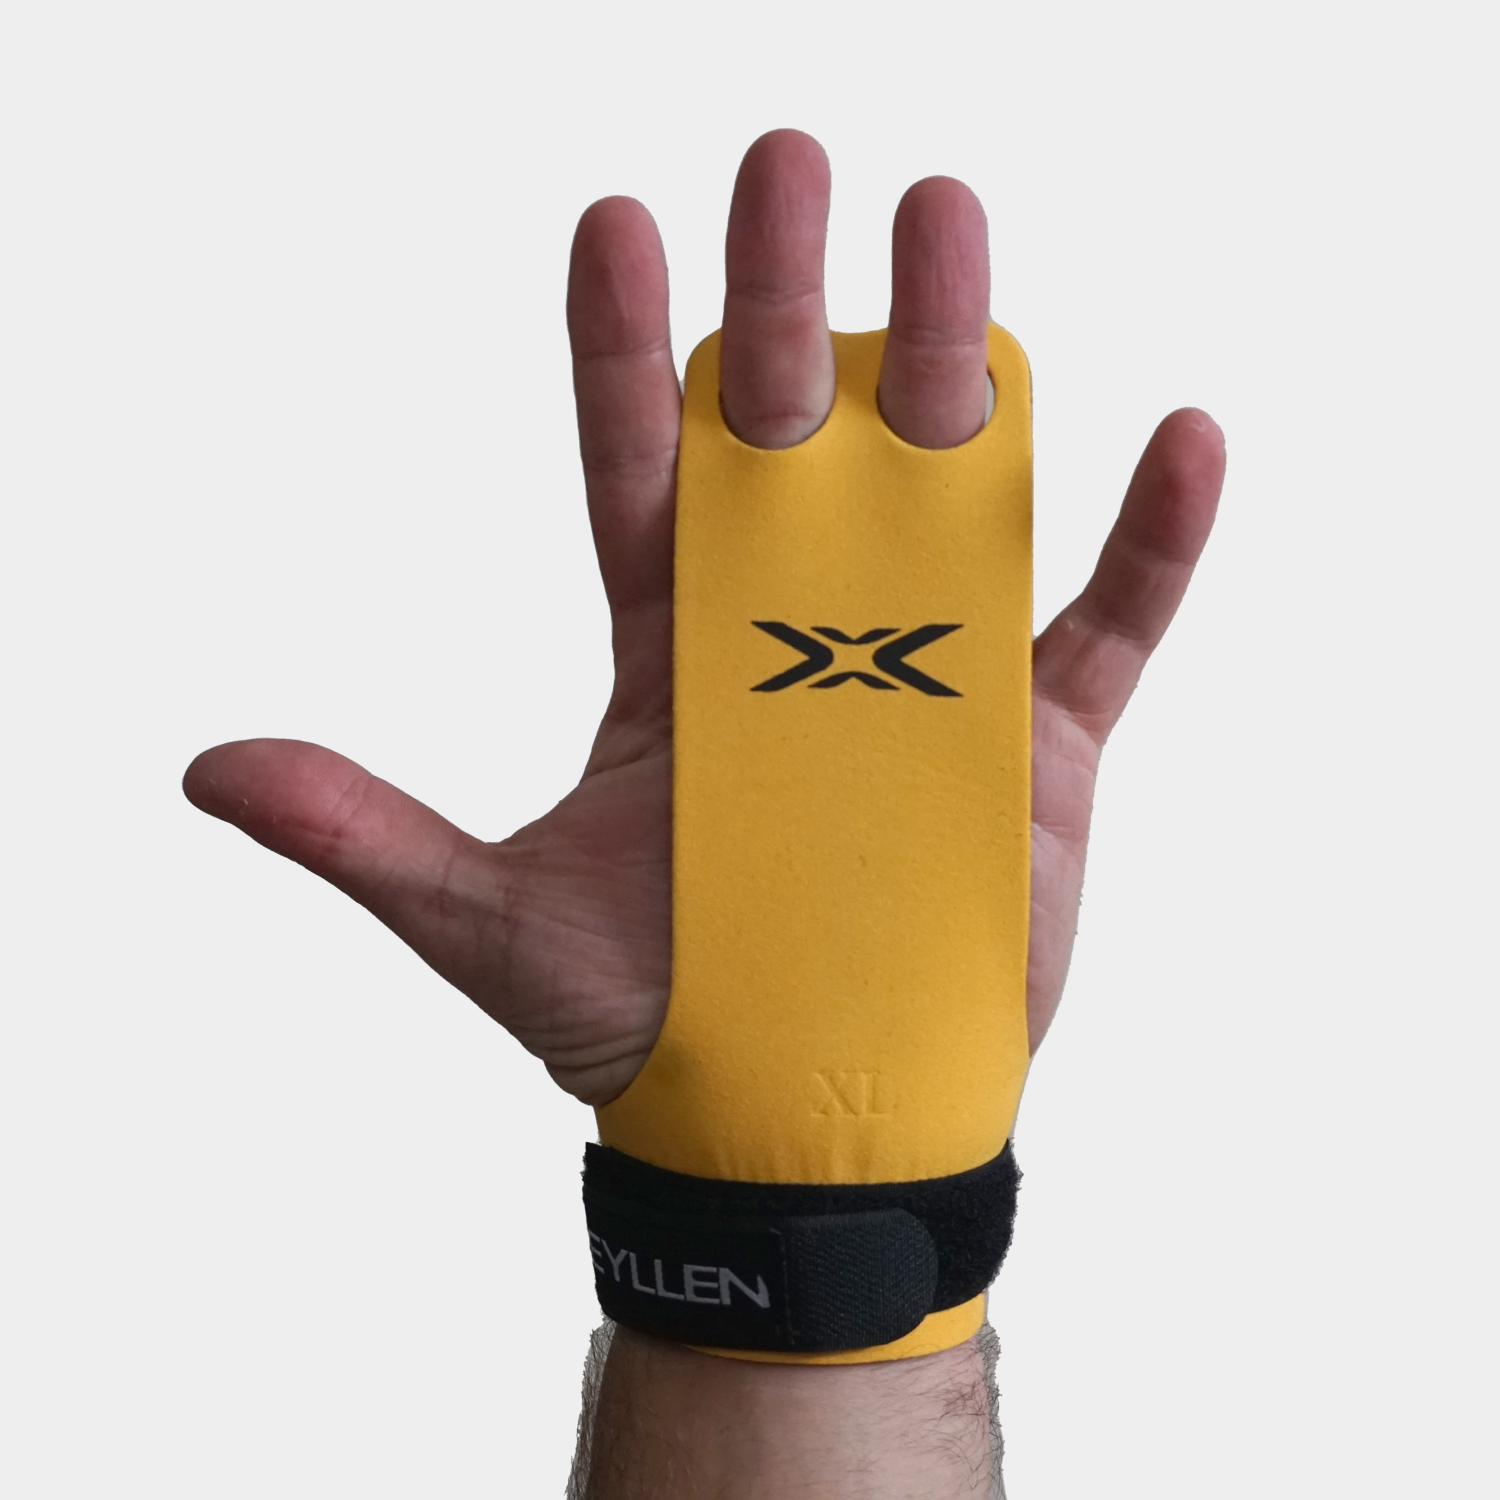 Reyllen X2 BumbleBee Crossfit Gymnastic Hand Grips - 2hole worn on hand view single